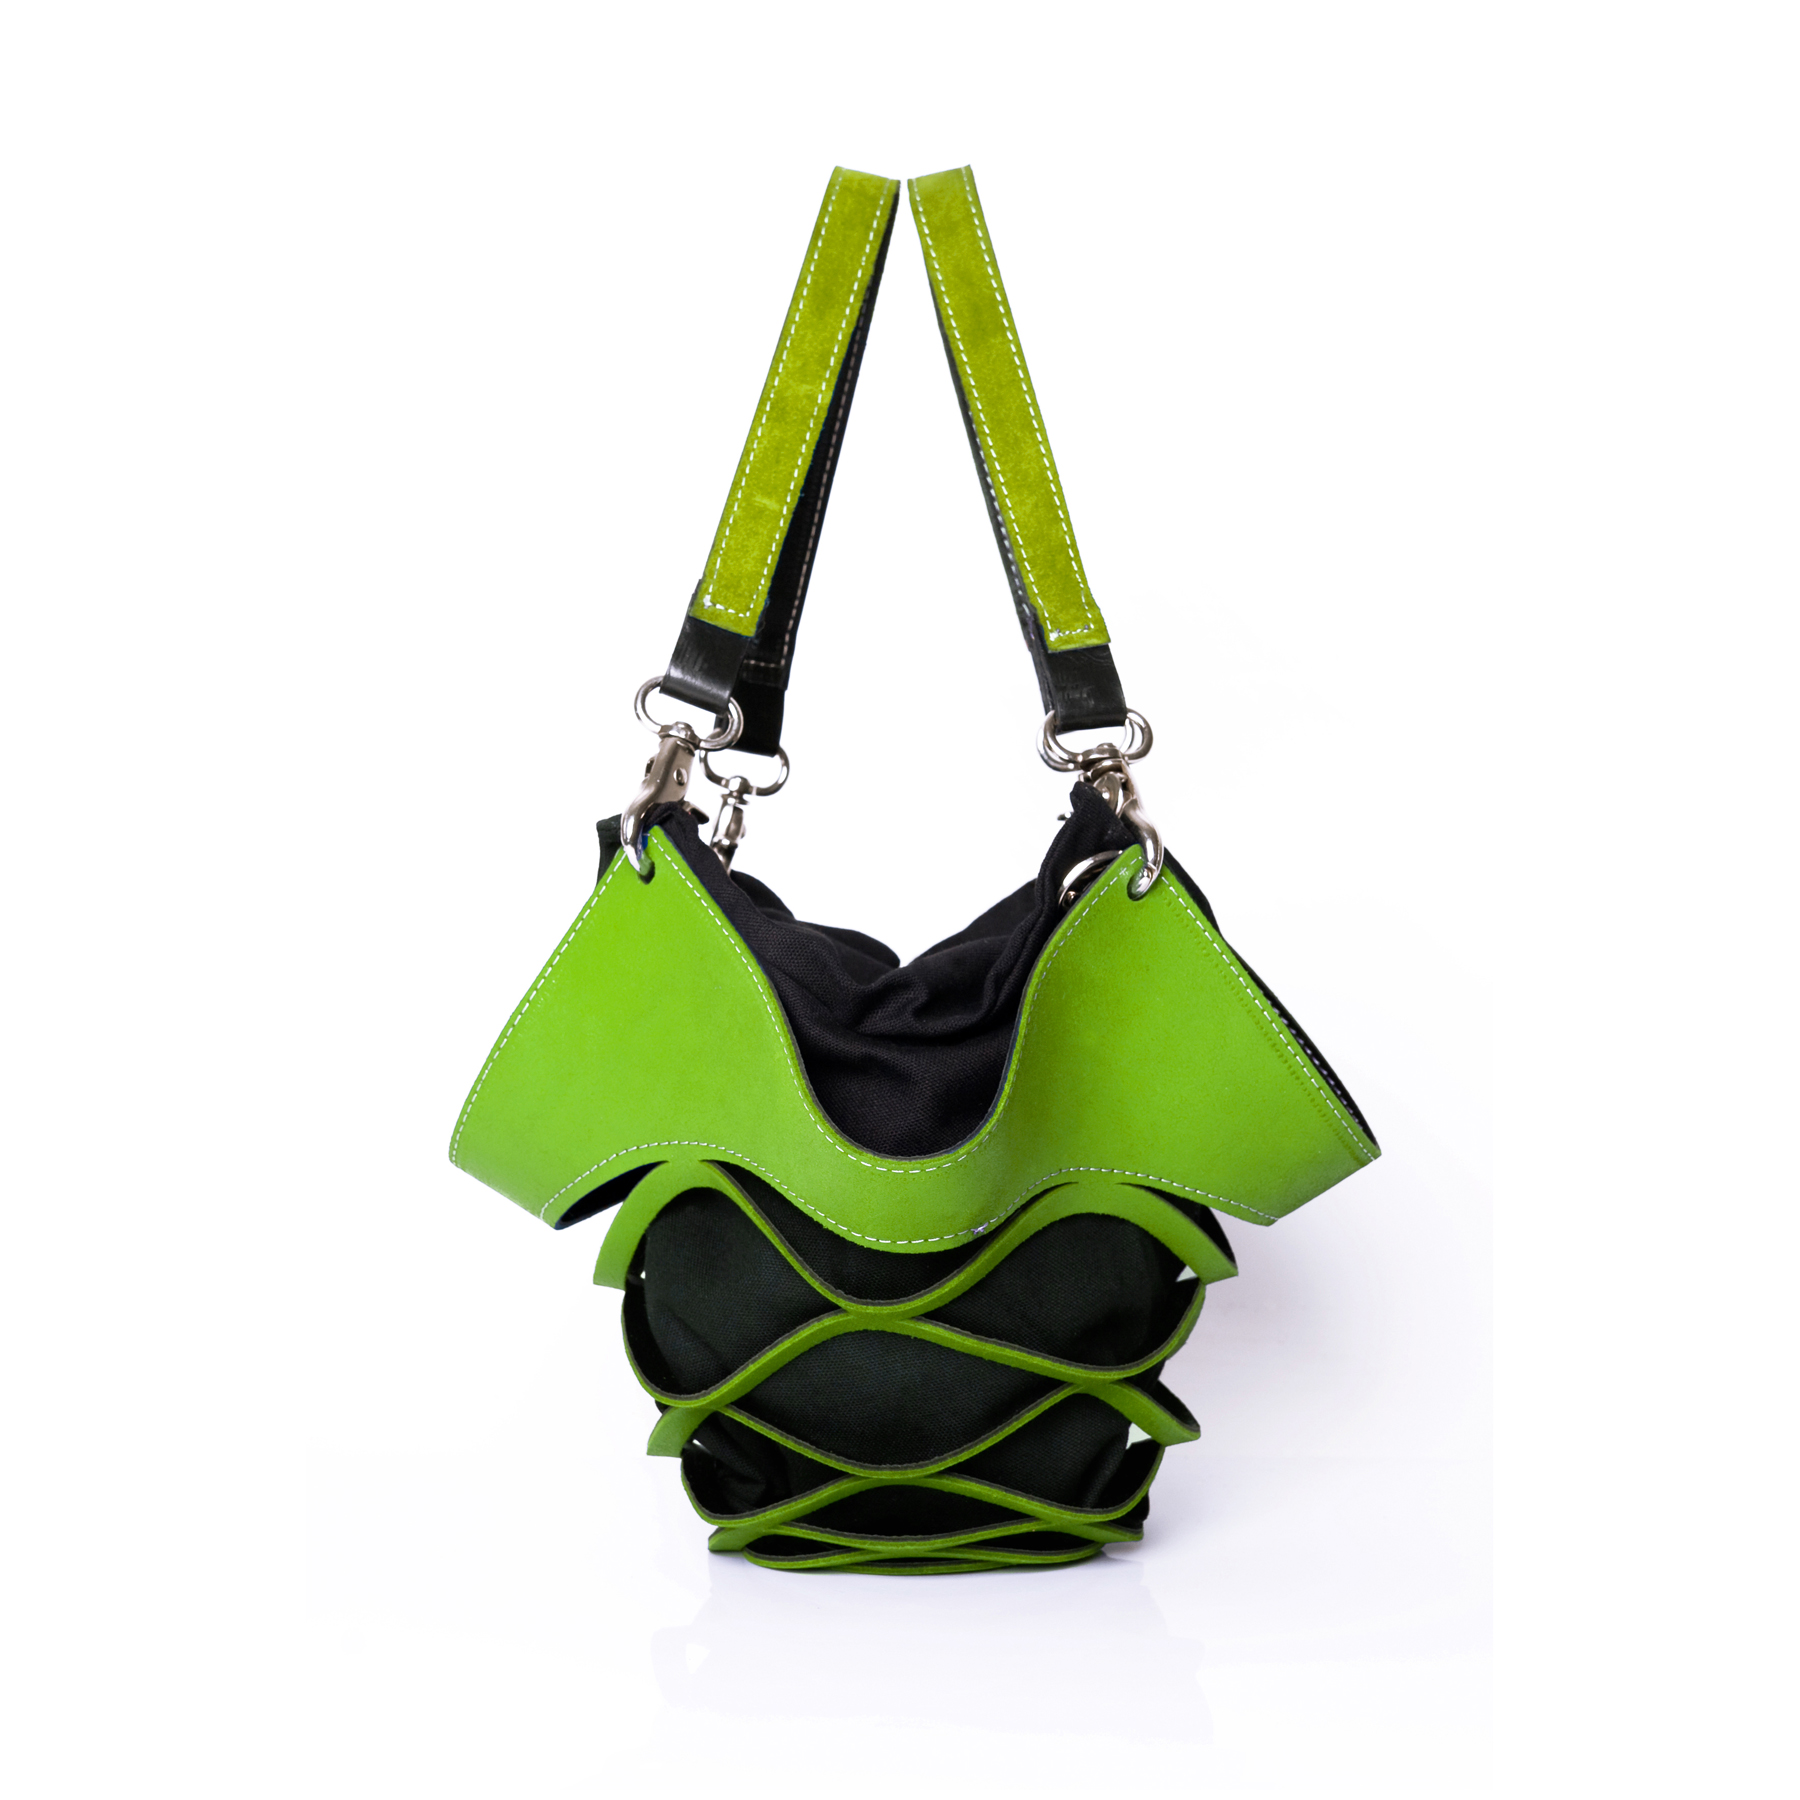 A' Design Award and Competition - Vera Handbag Diy Leather Kit Press Kit